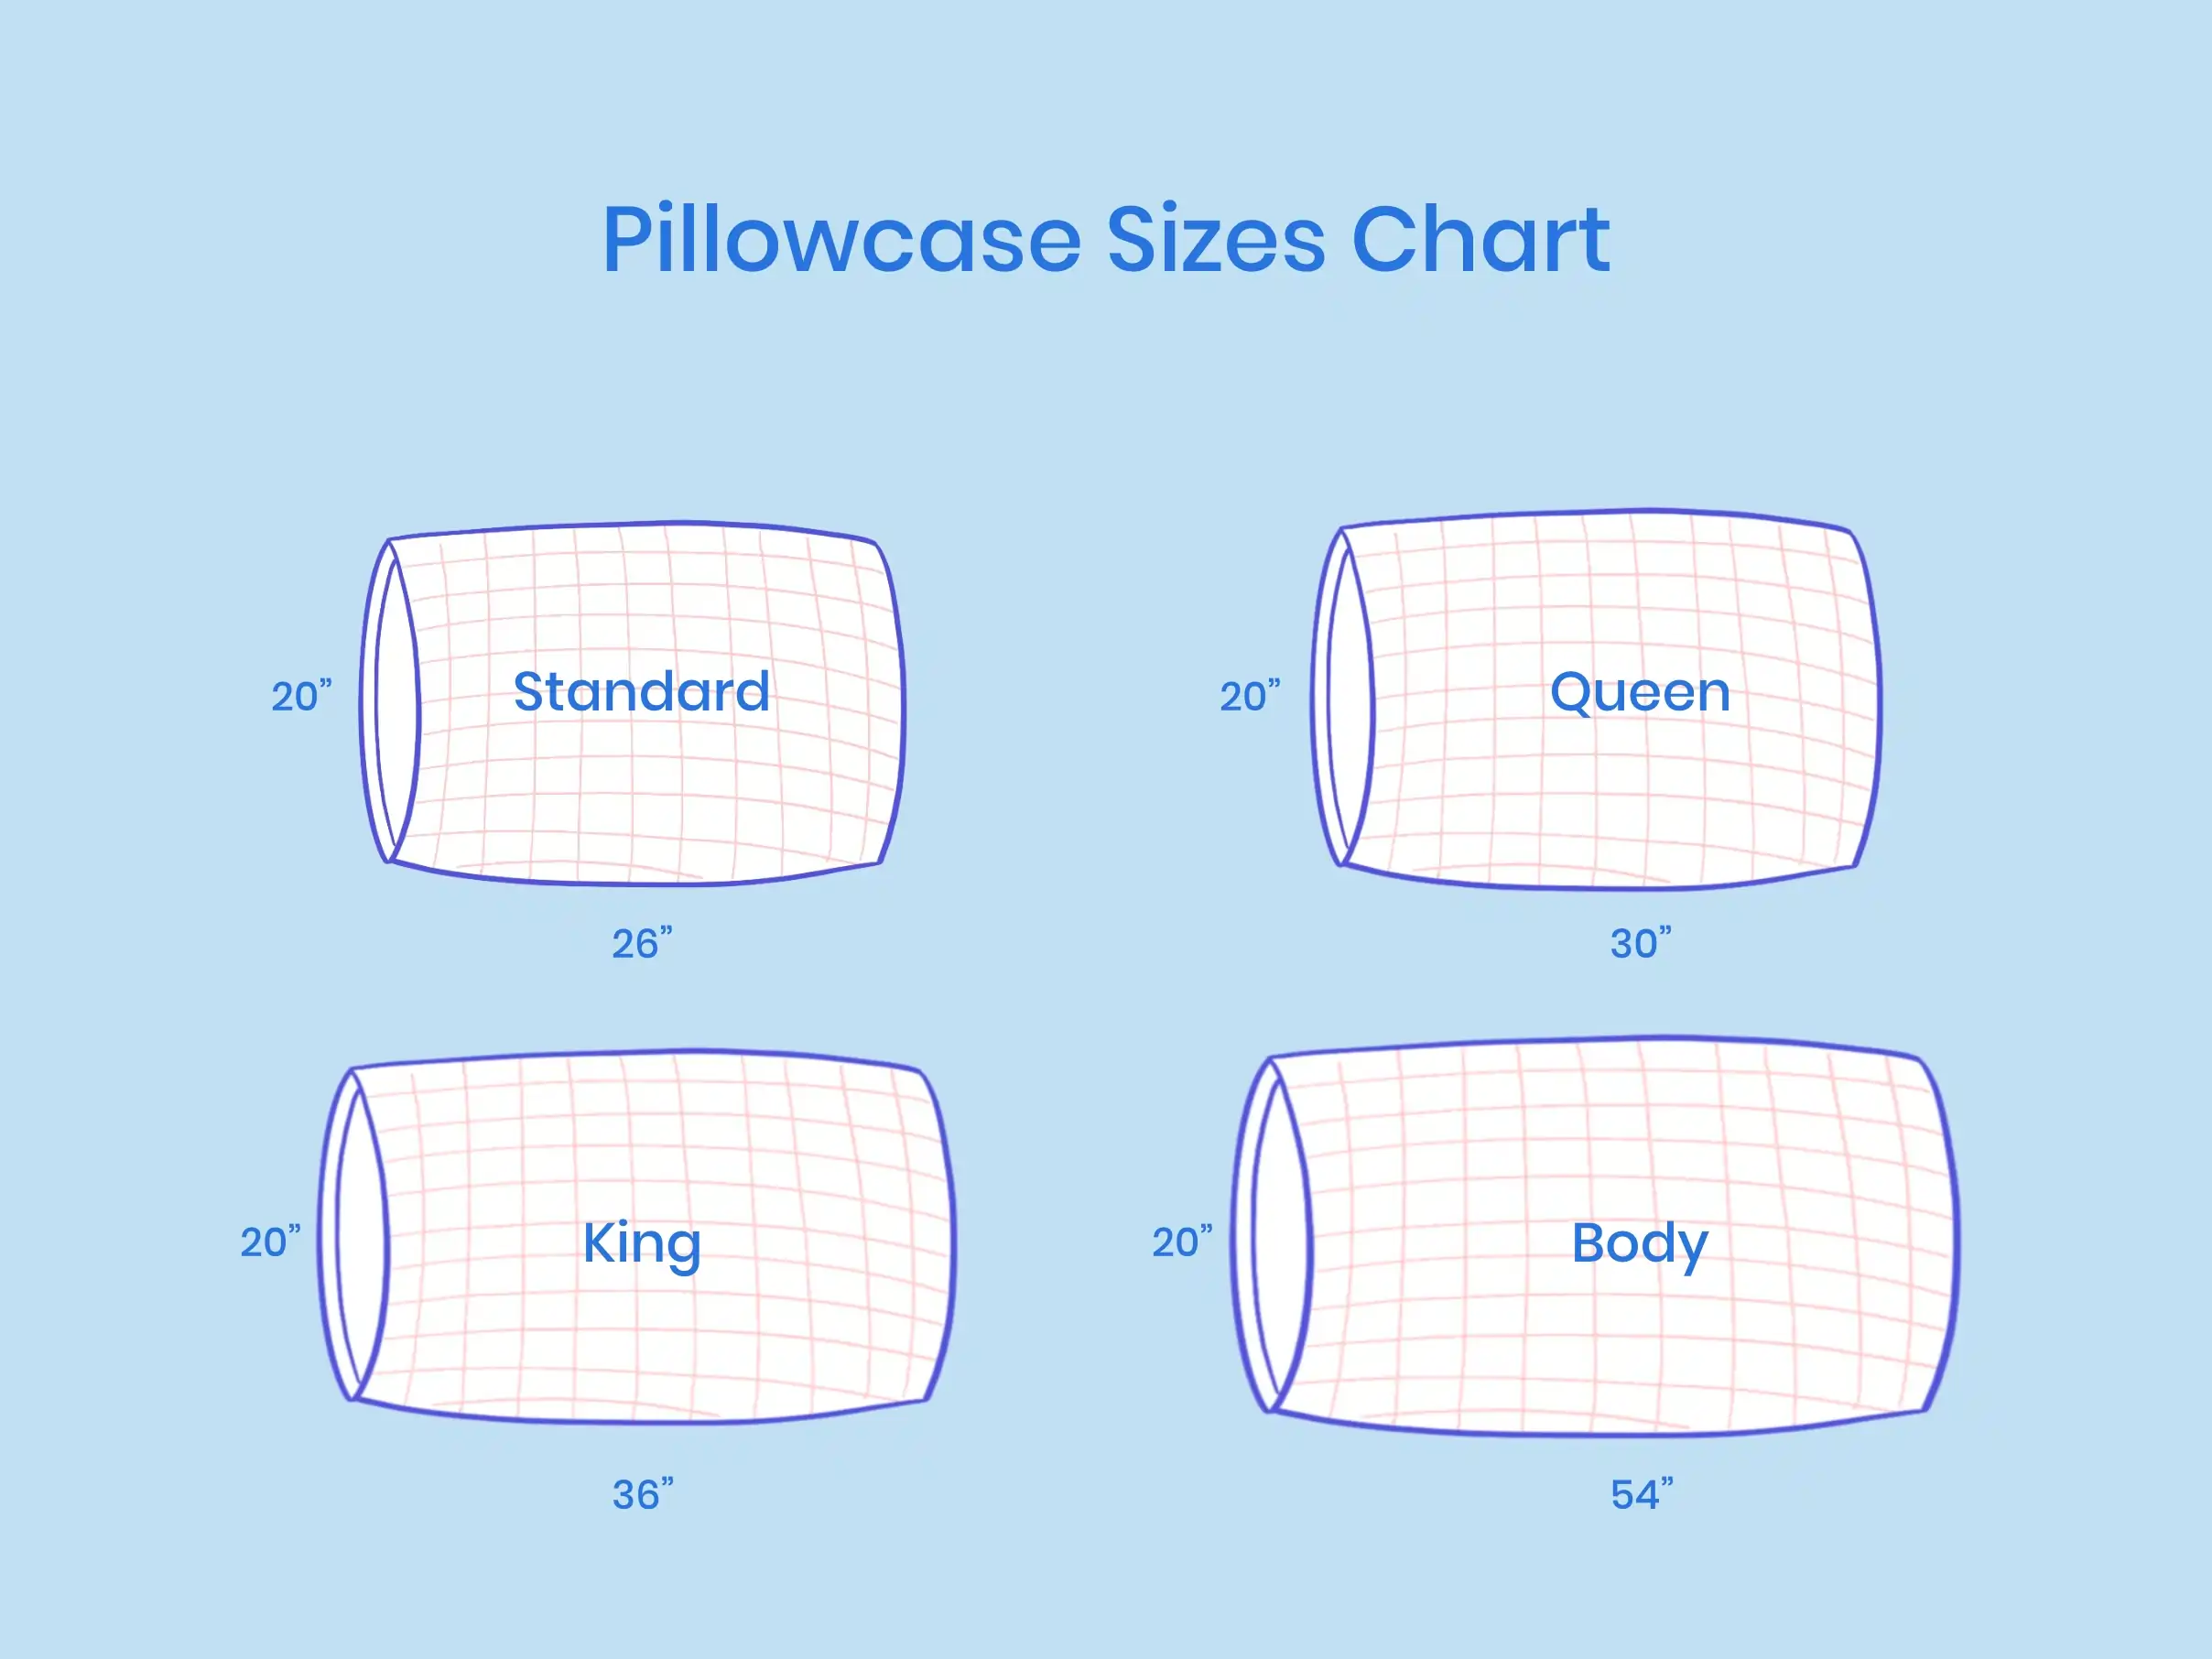 Illustration of Pillow Case Sizes chart